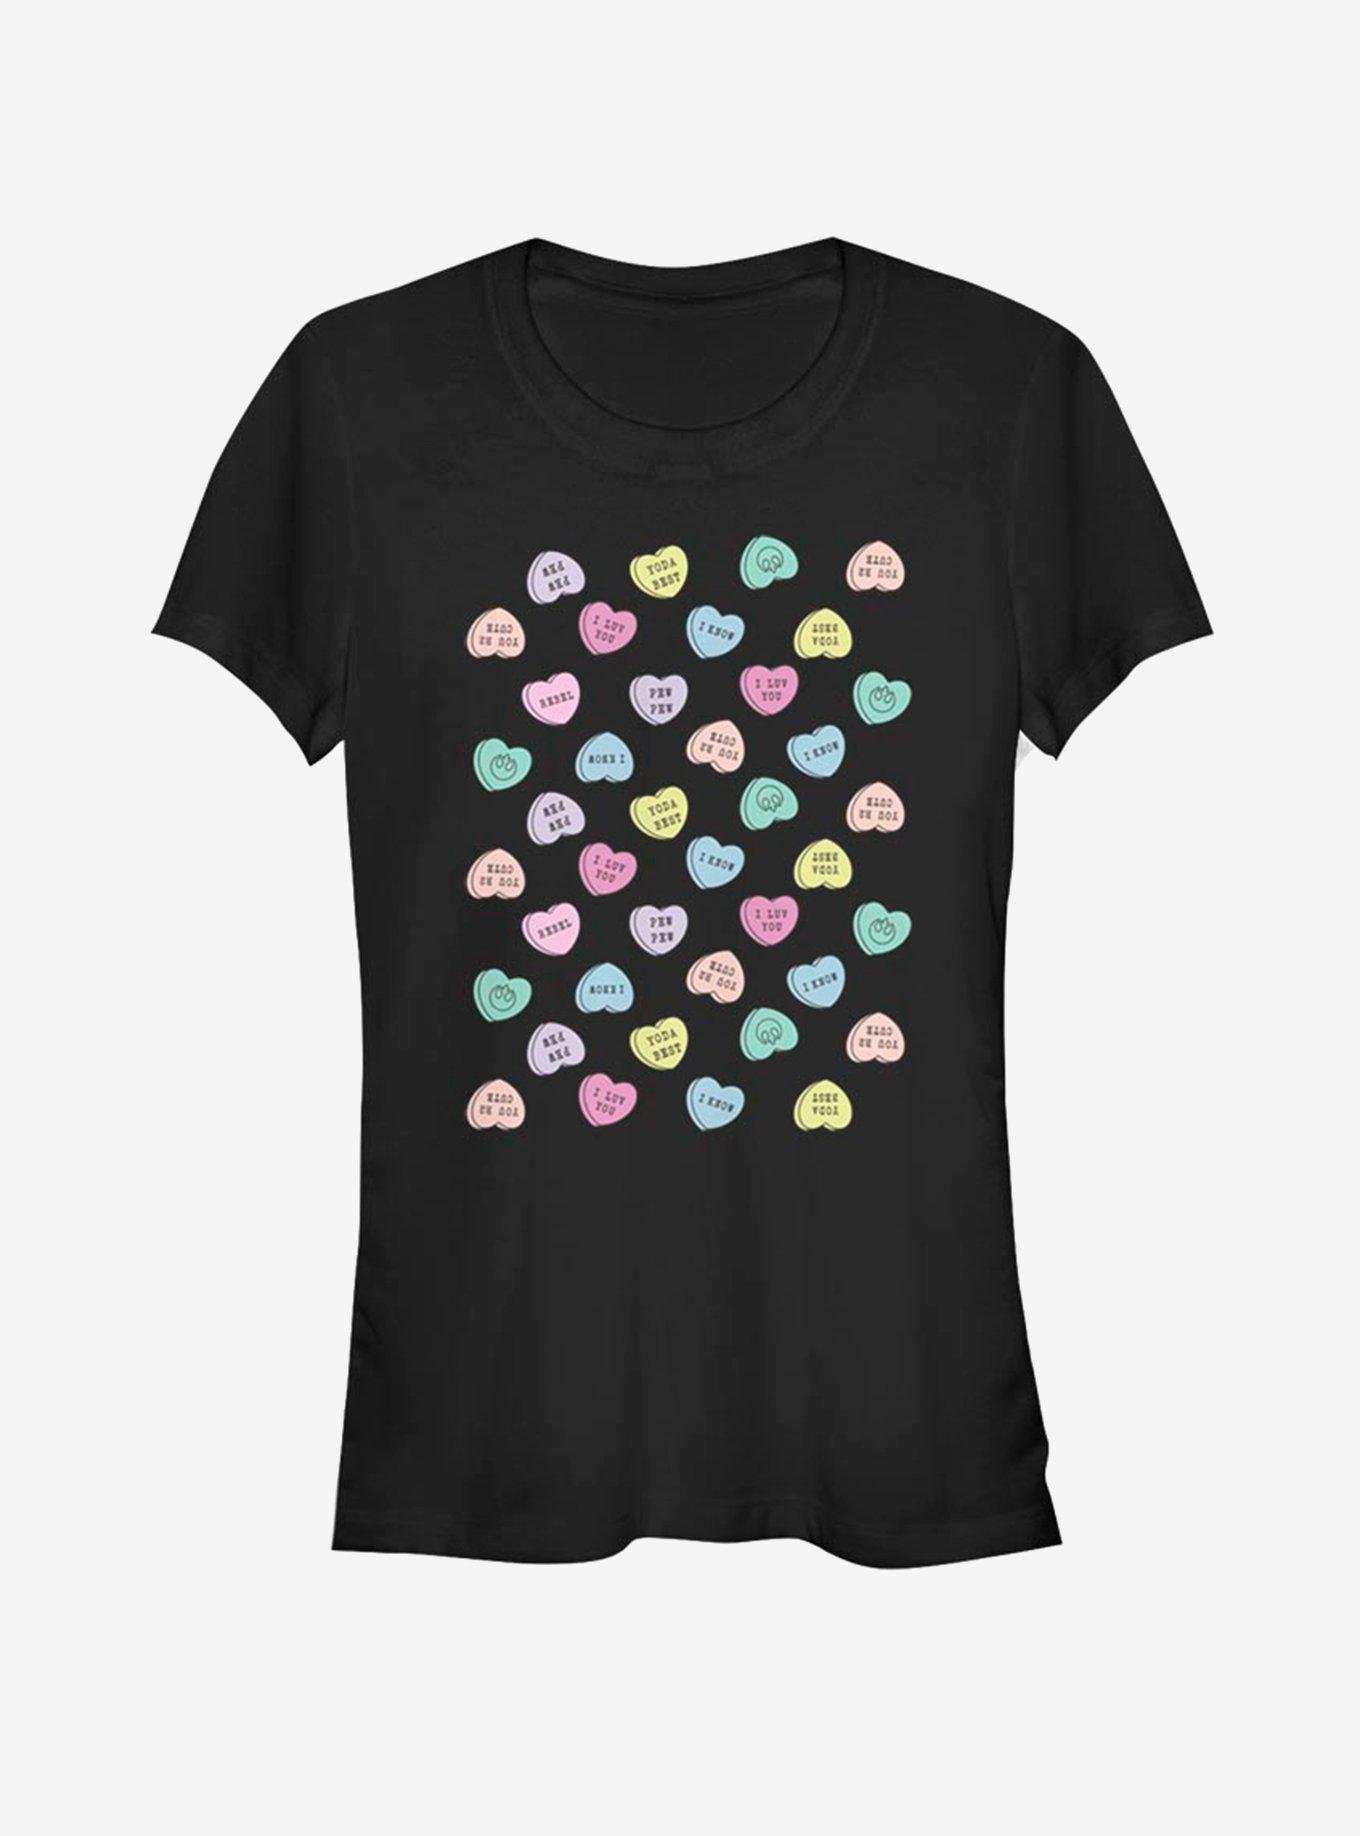 Star Wars Candy Hearts Girls T-Shirt, , hi-res